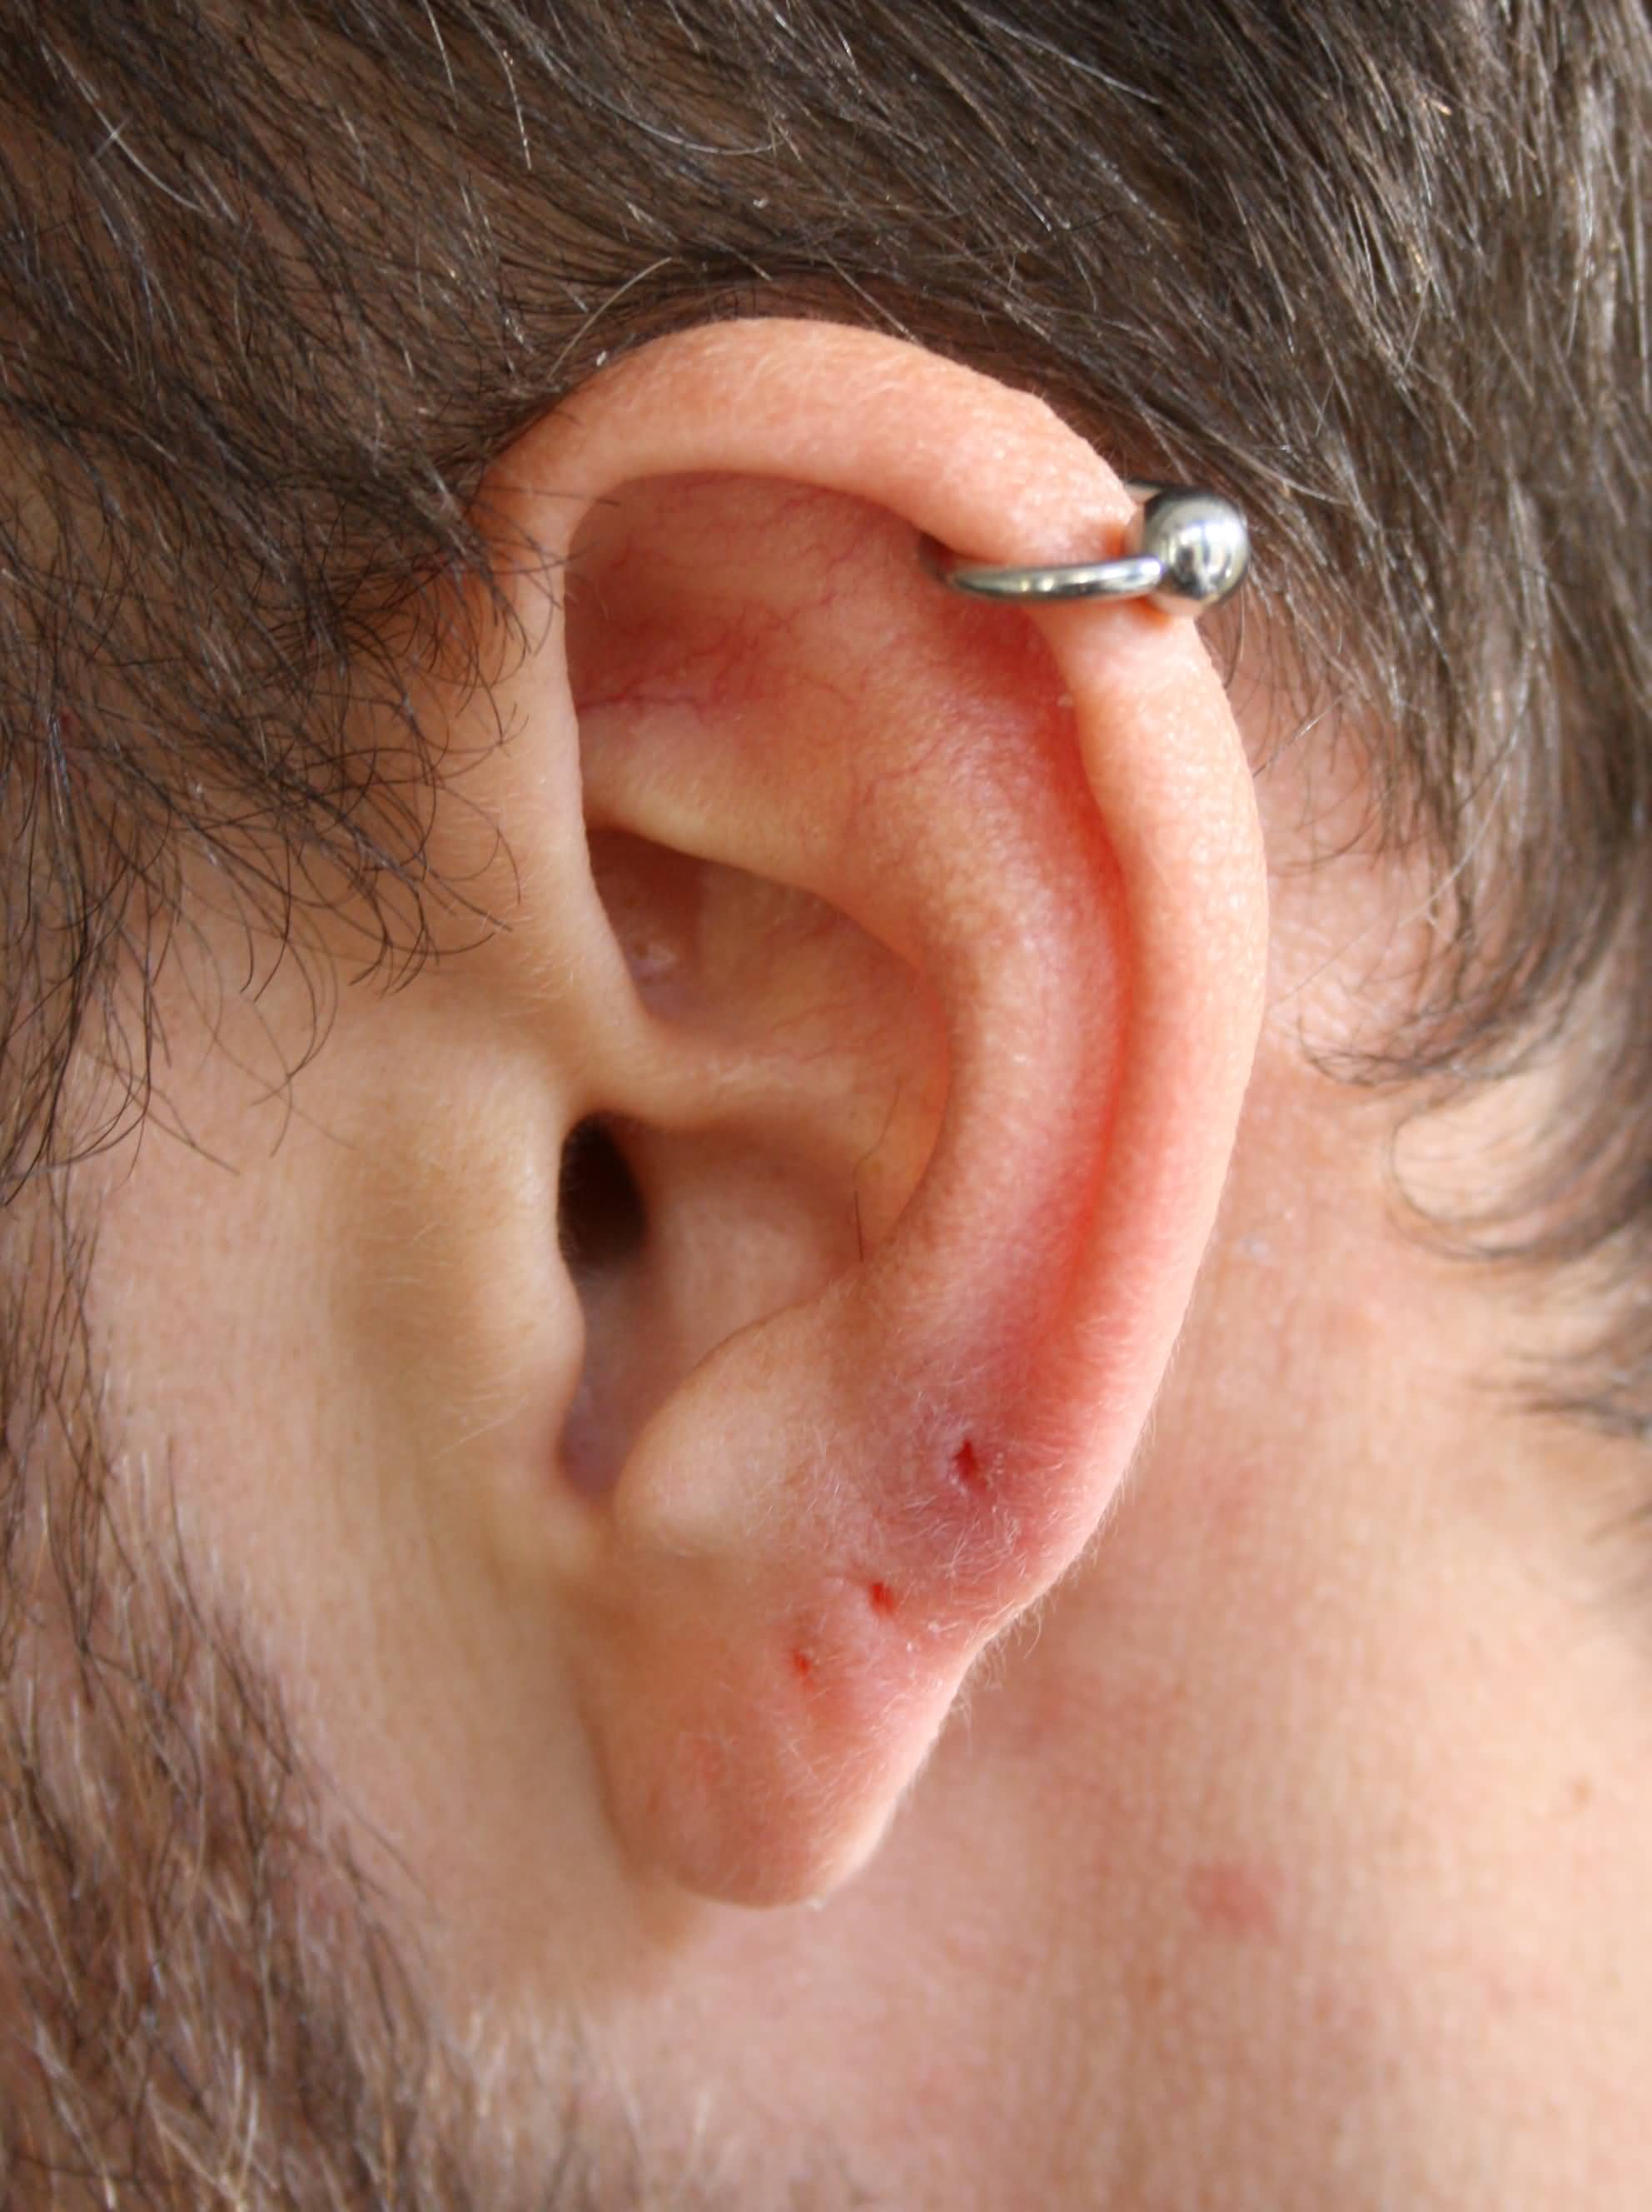 Silver Bead Ring Helix Piercing On Left Ear